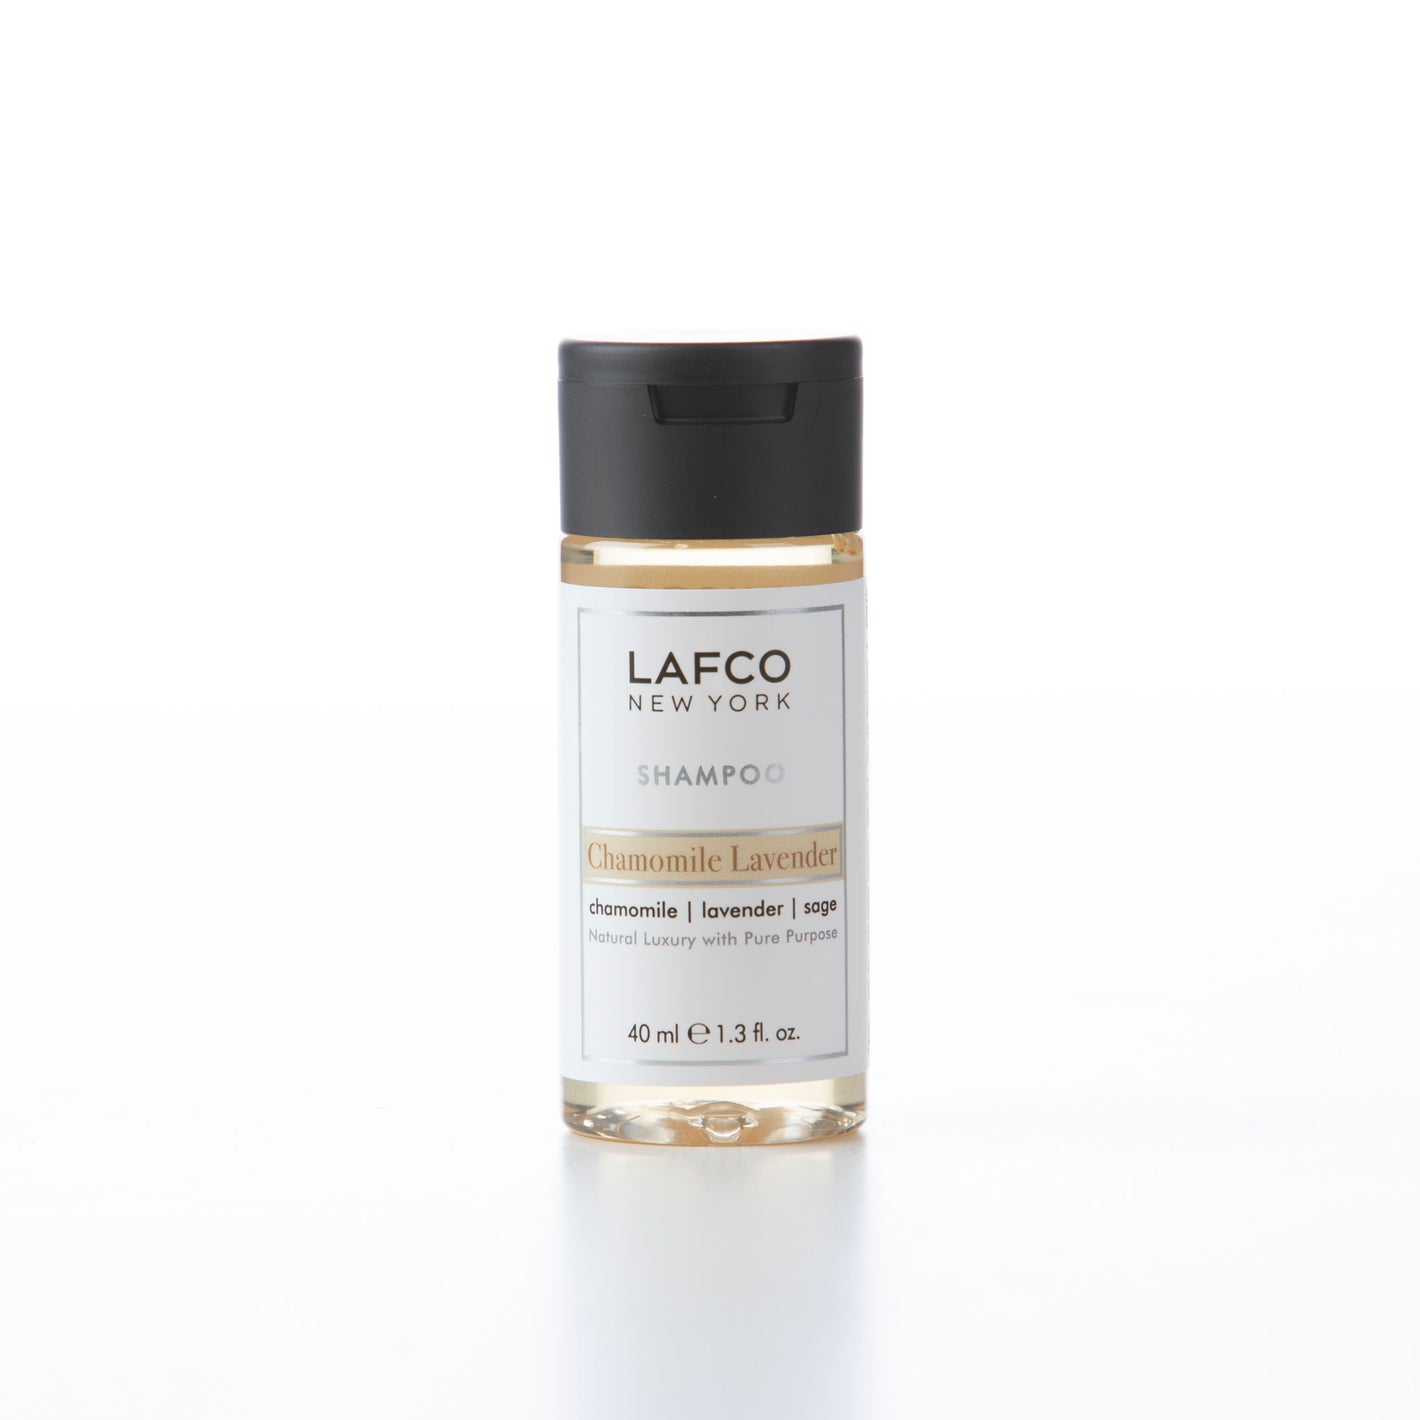 Lafco New York chamomile lavender shampoo in miniature 40ml bottle